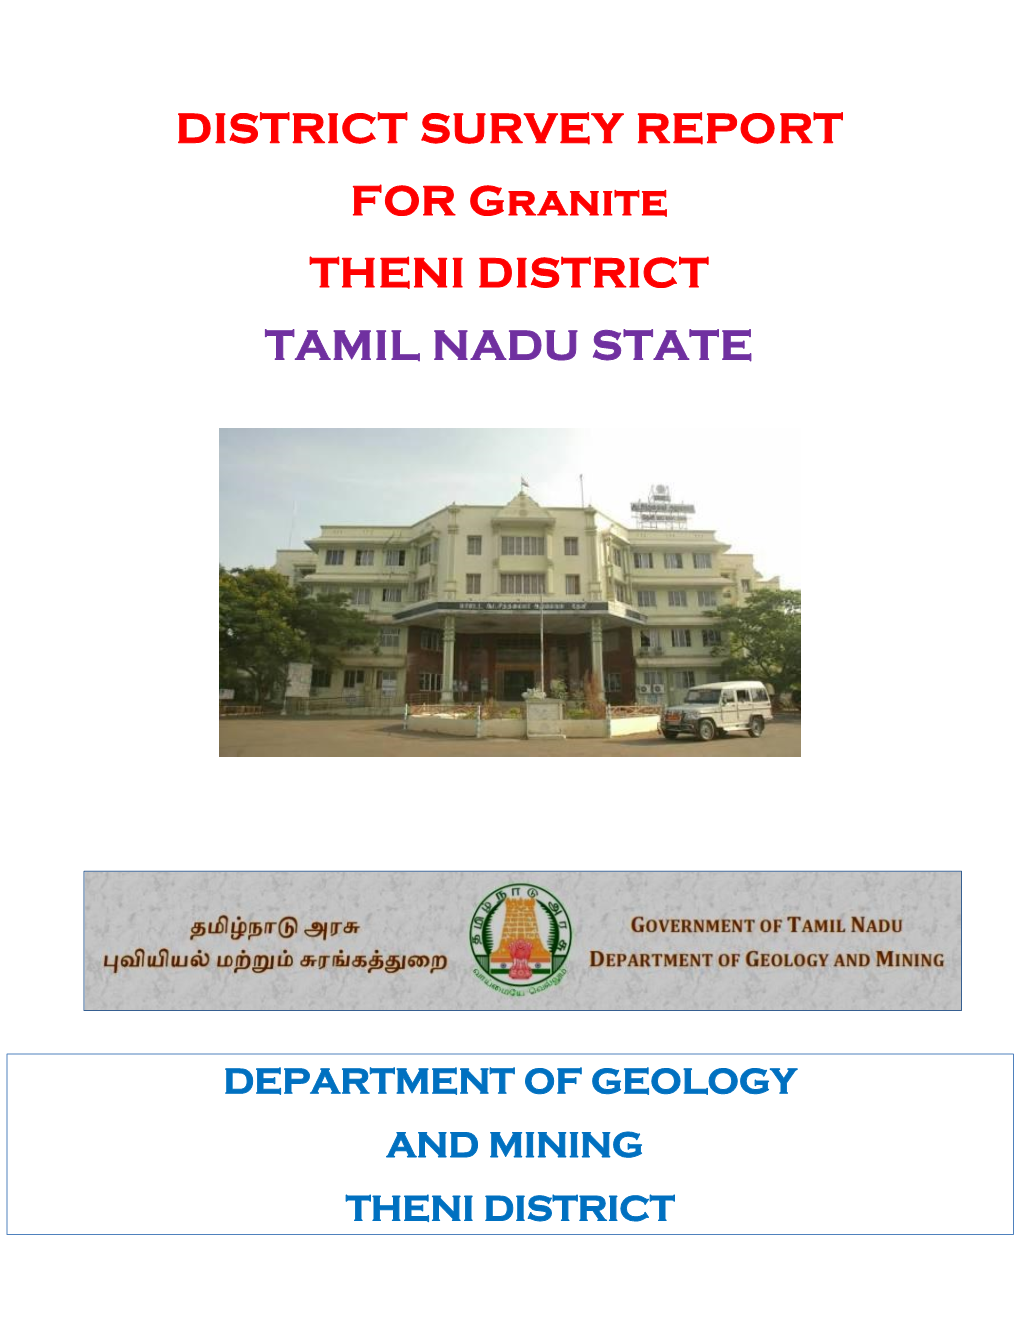 DISTRICT SURVEY REPORT for Granite THENI DISTRICT TAMIL NADU STATE